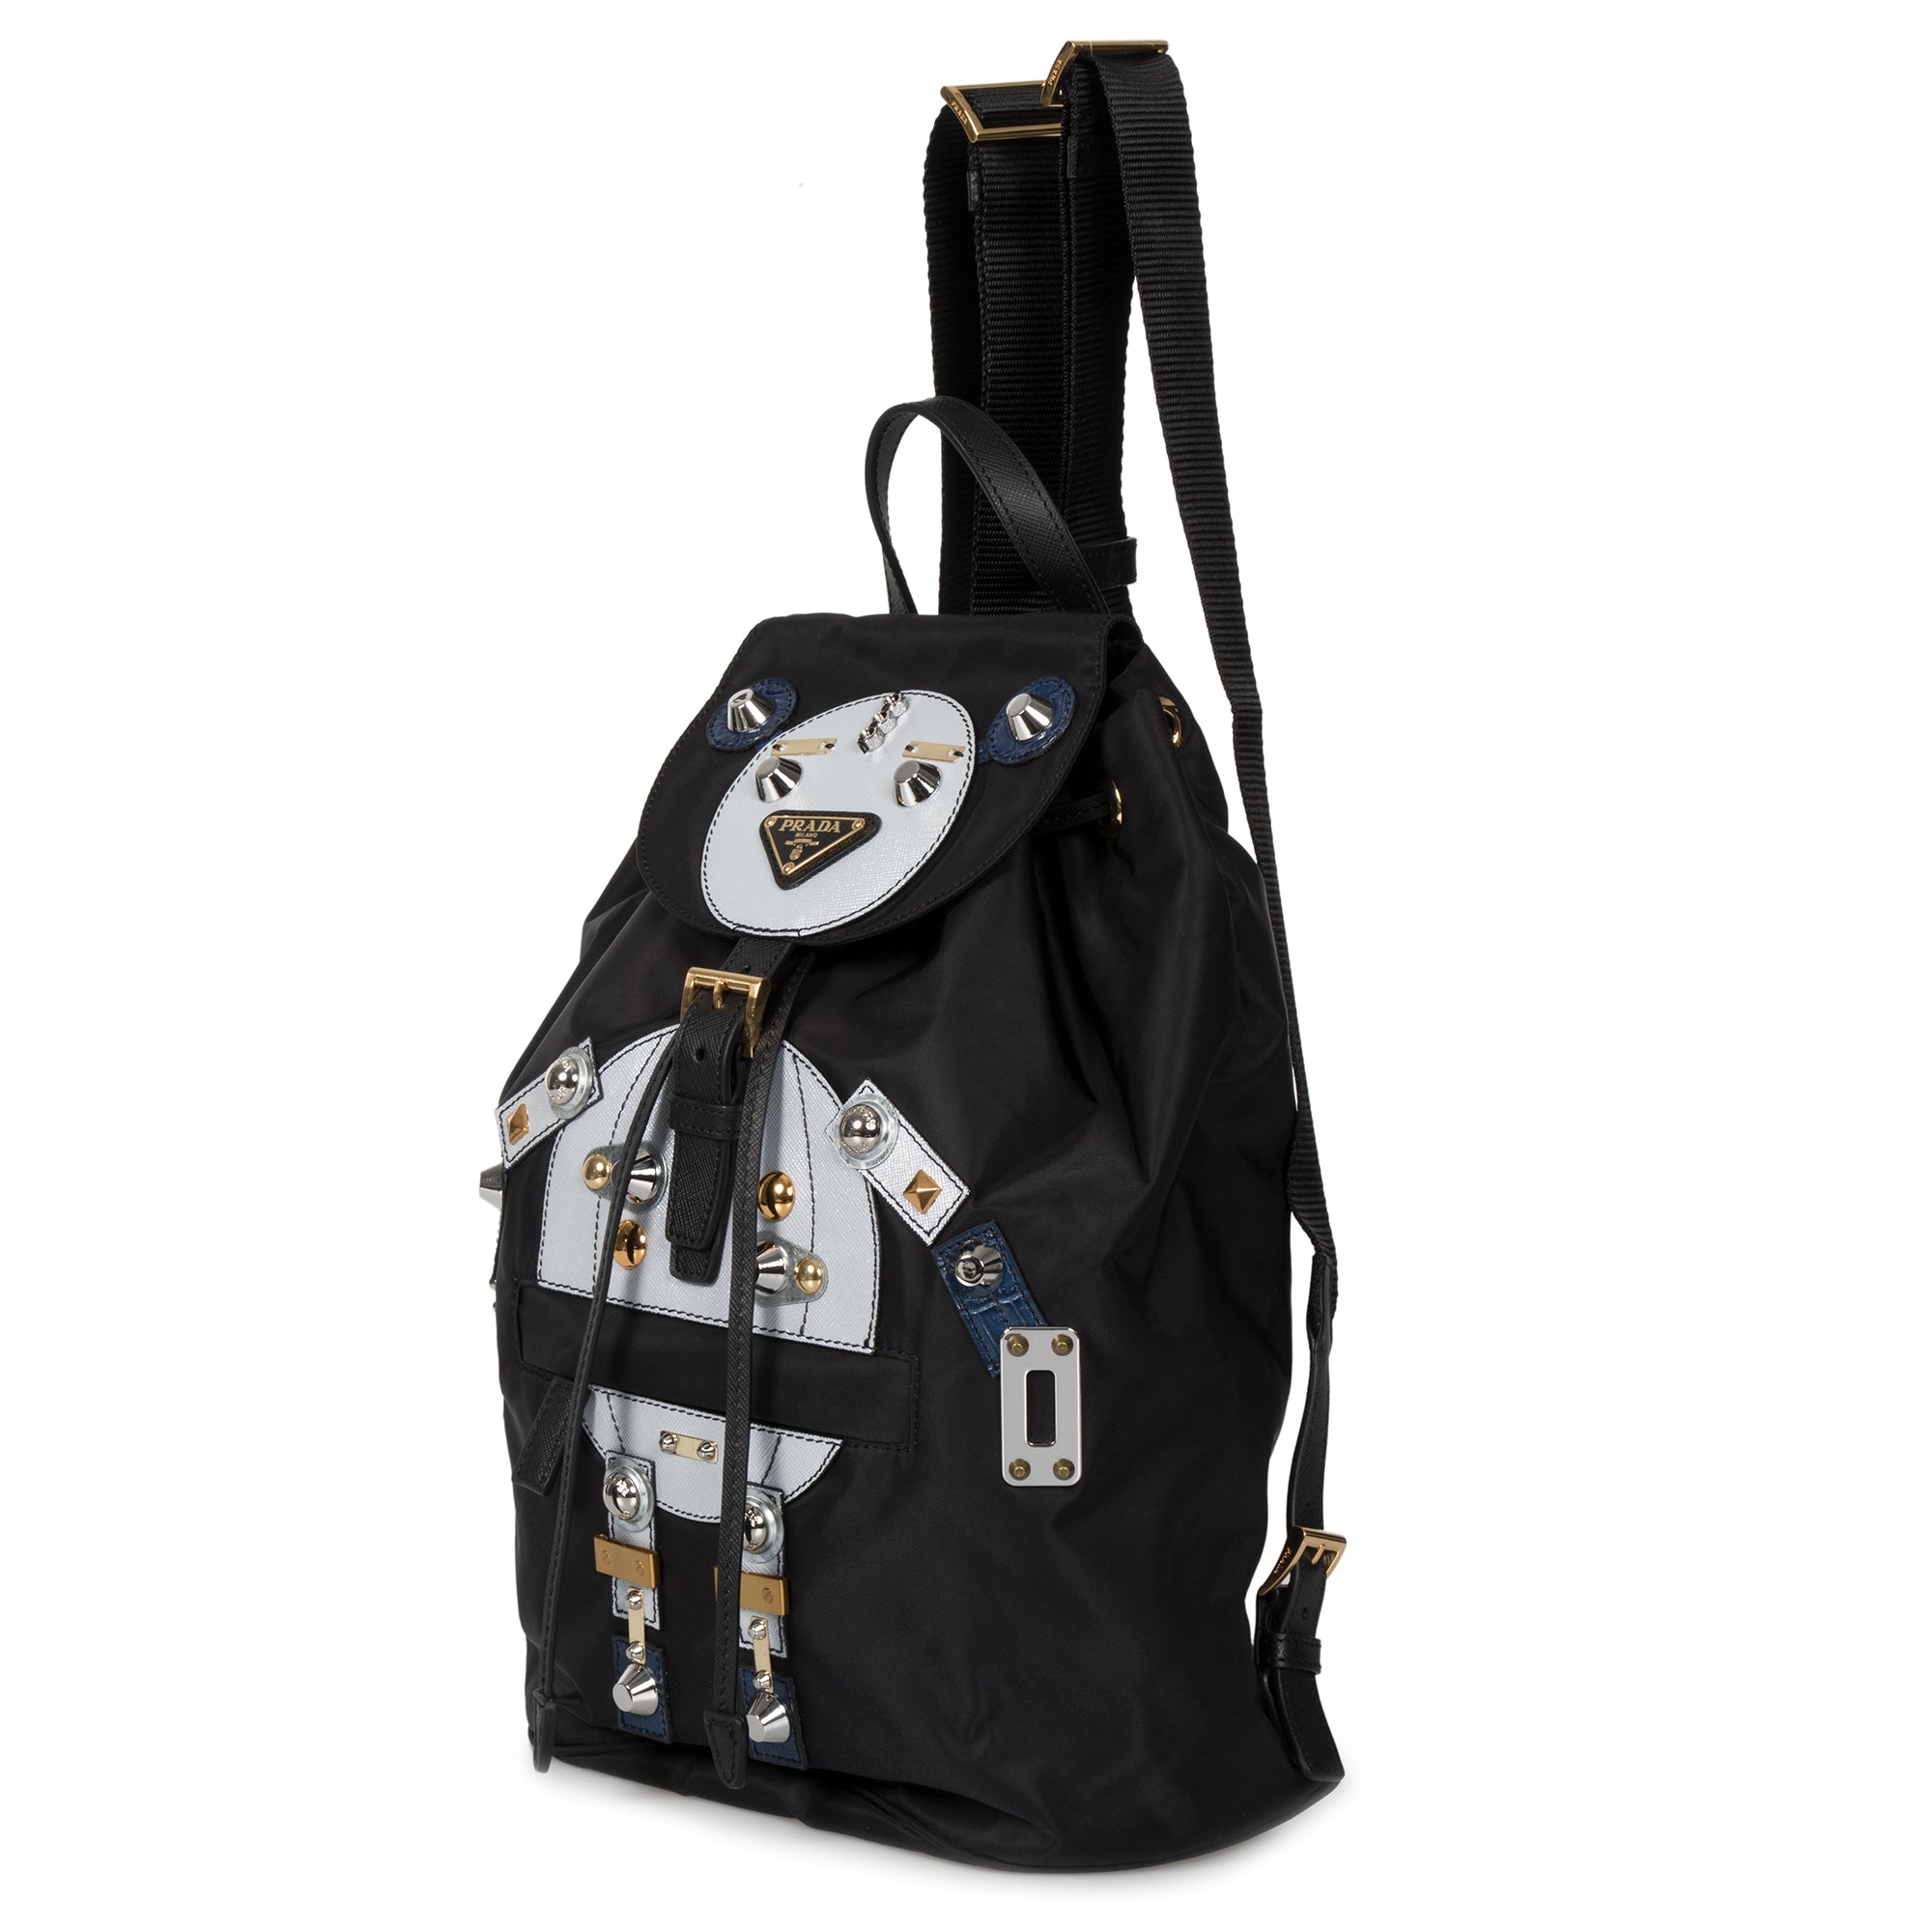 Prada Black Fabric Backpack With Robot Motif